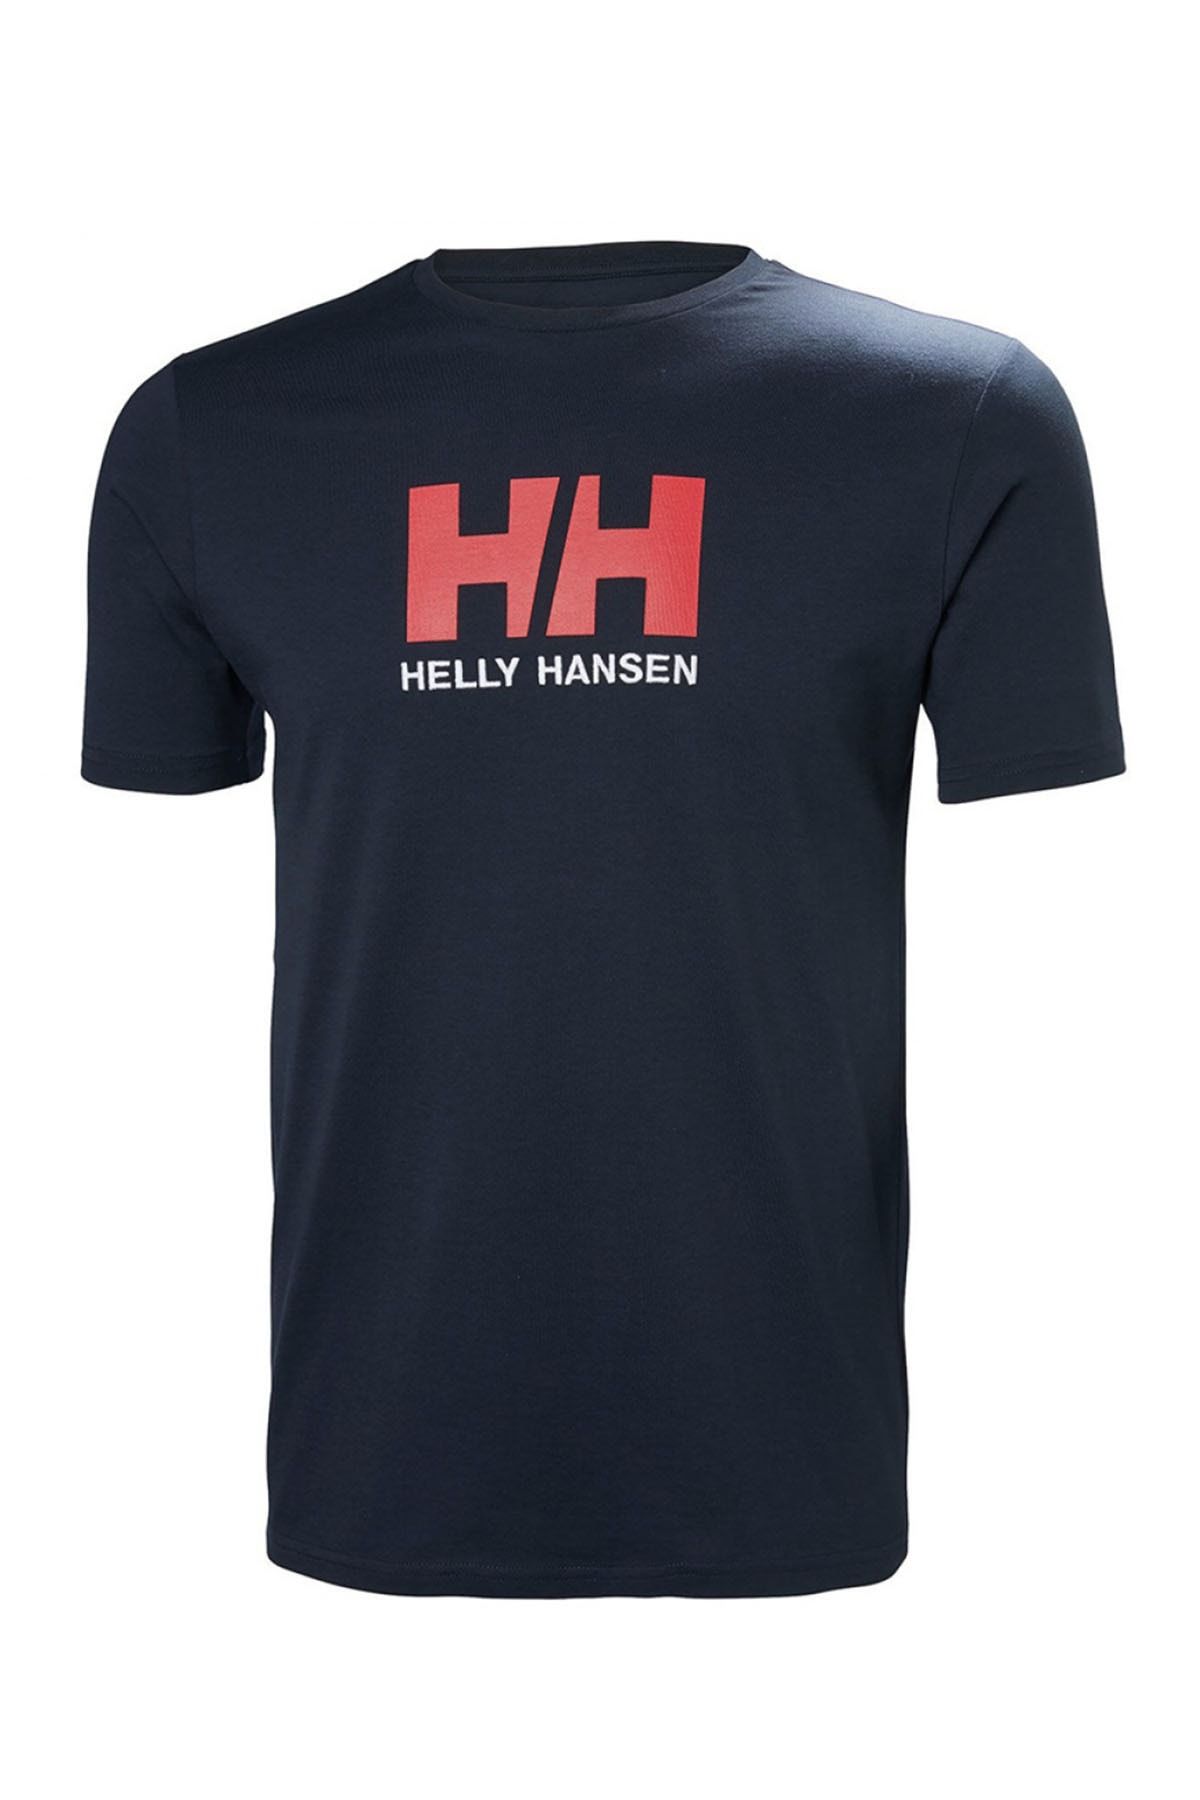 Helly Hansen Erkek Spor T-Shirt - 33979-597